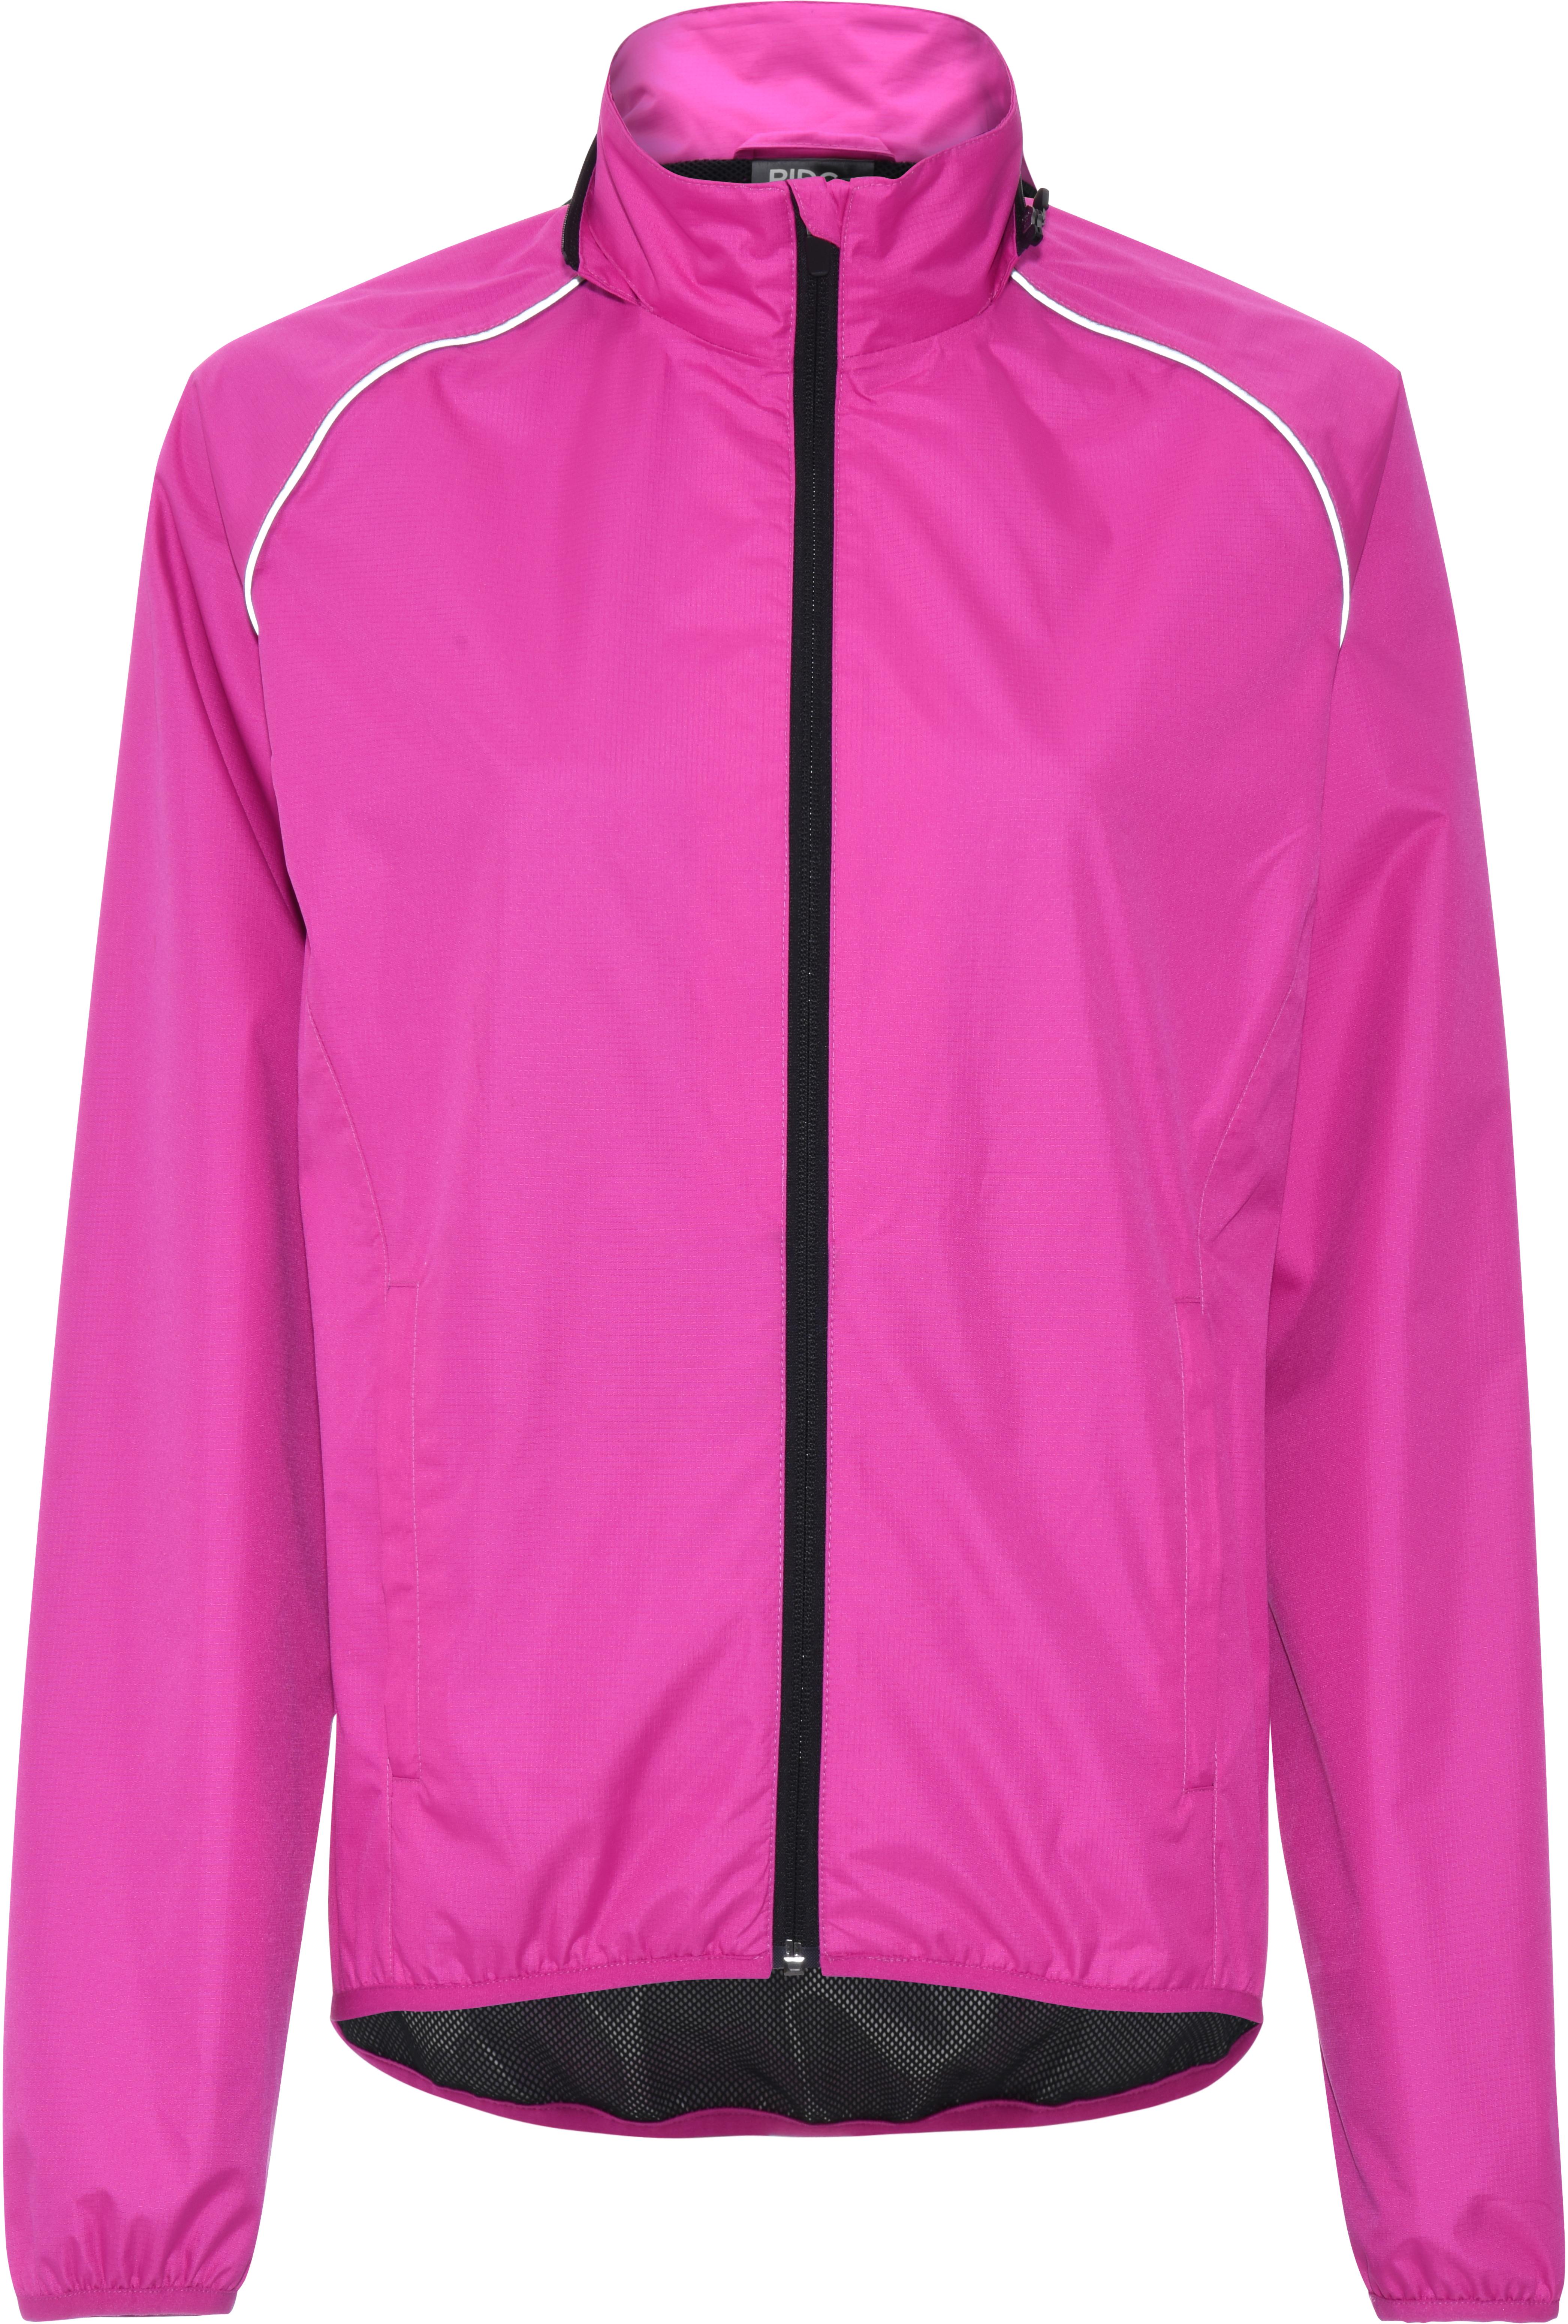 Ridge Womens Waterproof Jacket - Pink, 10